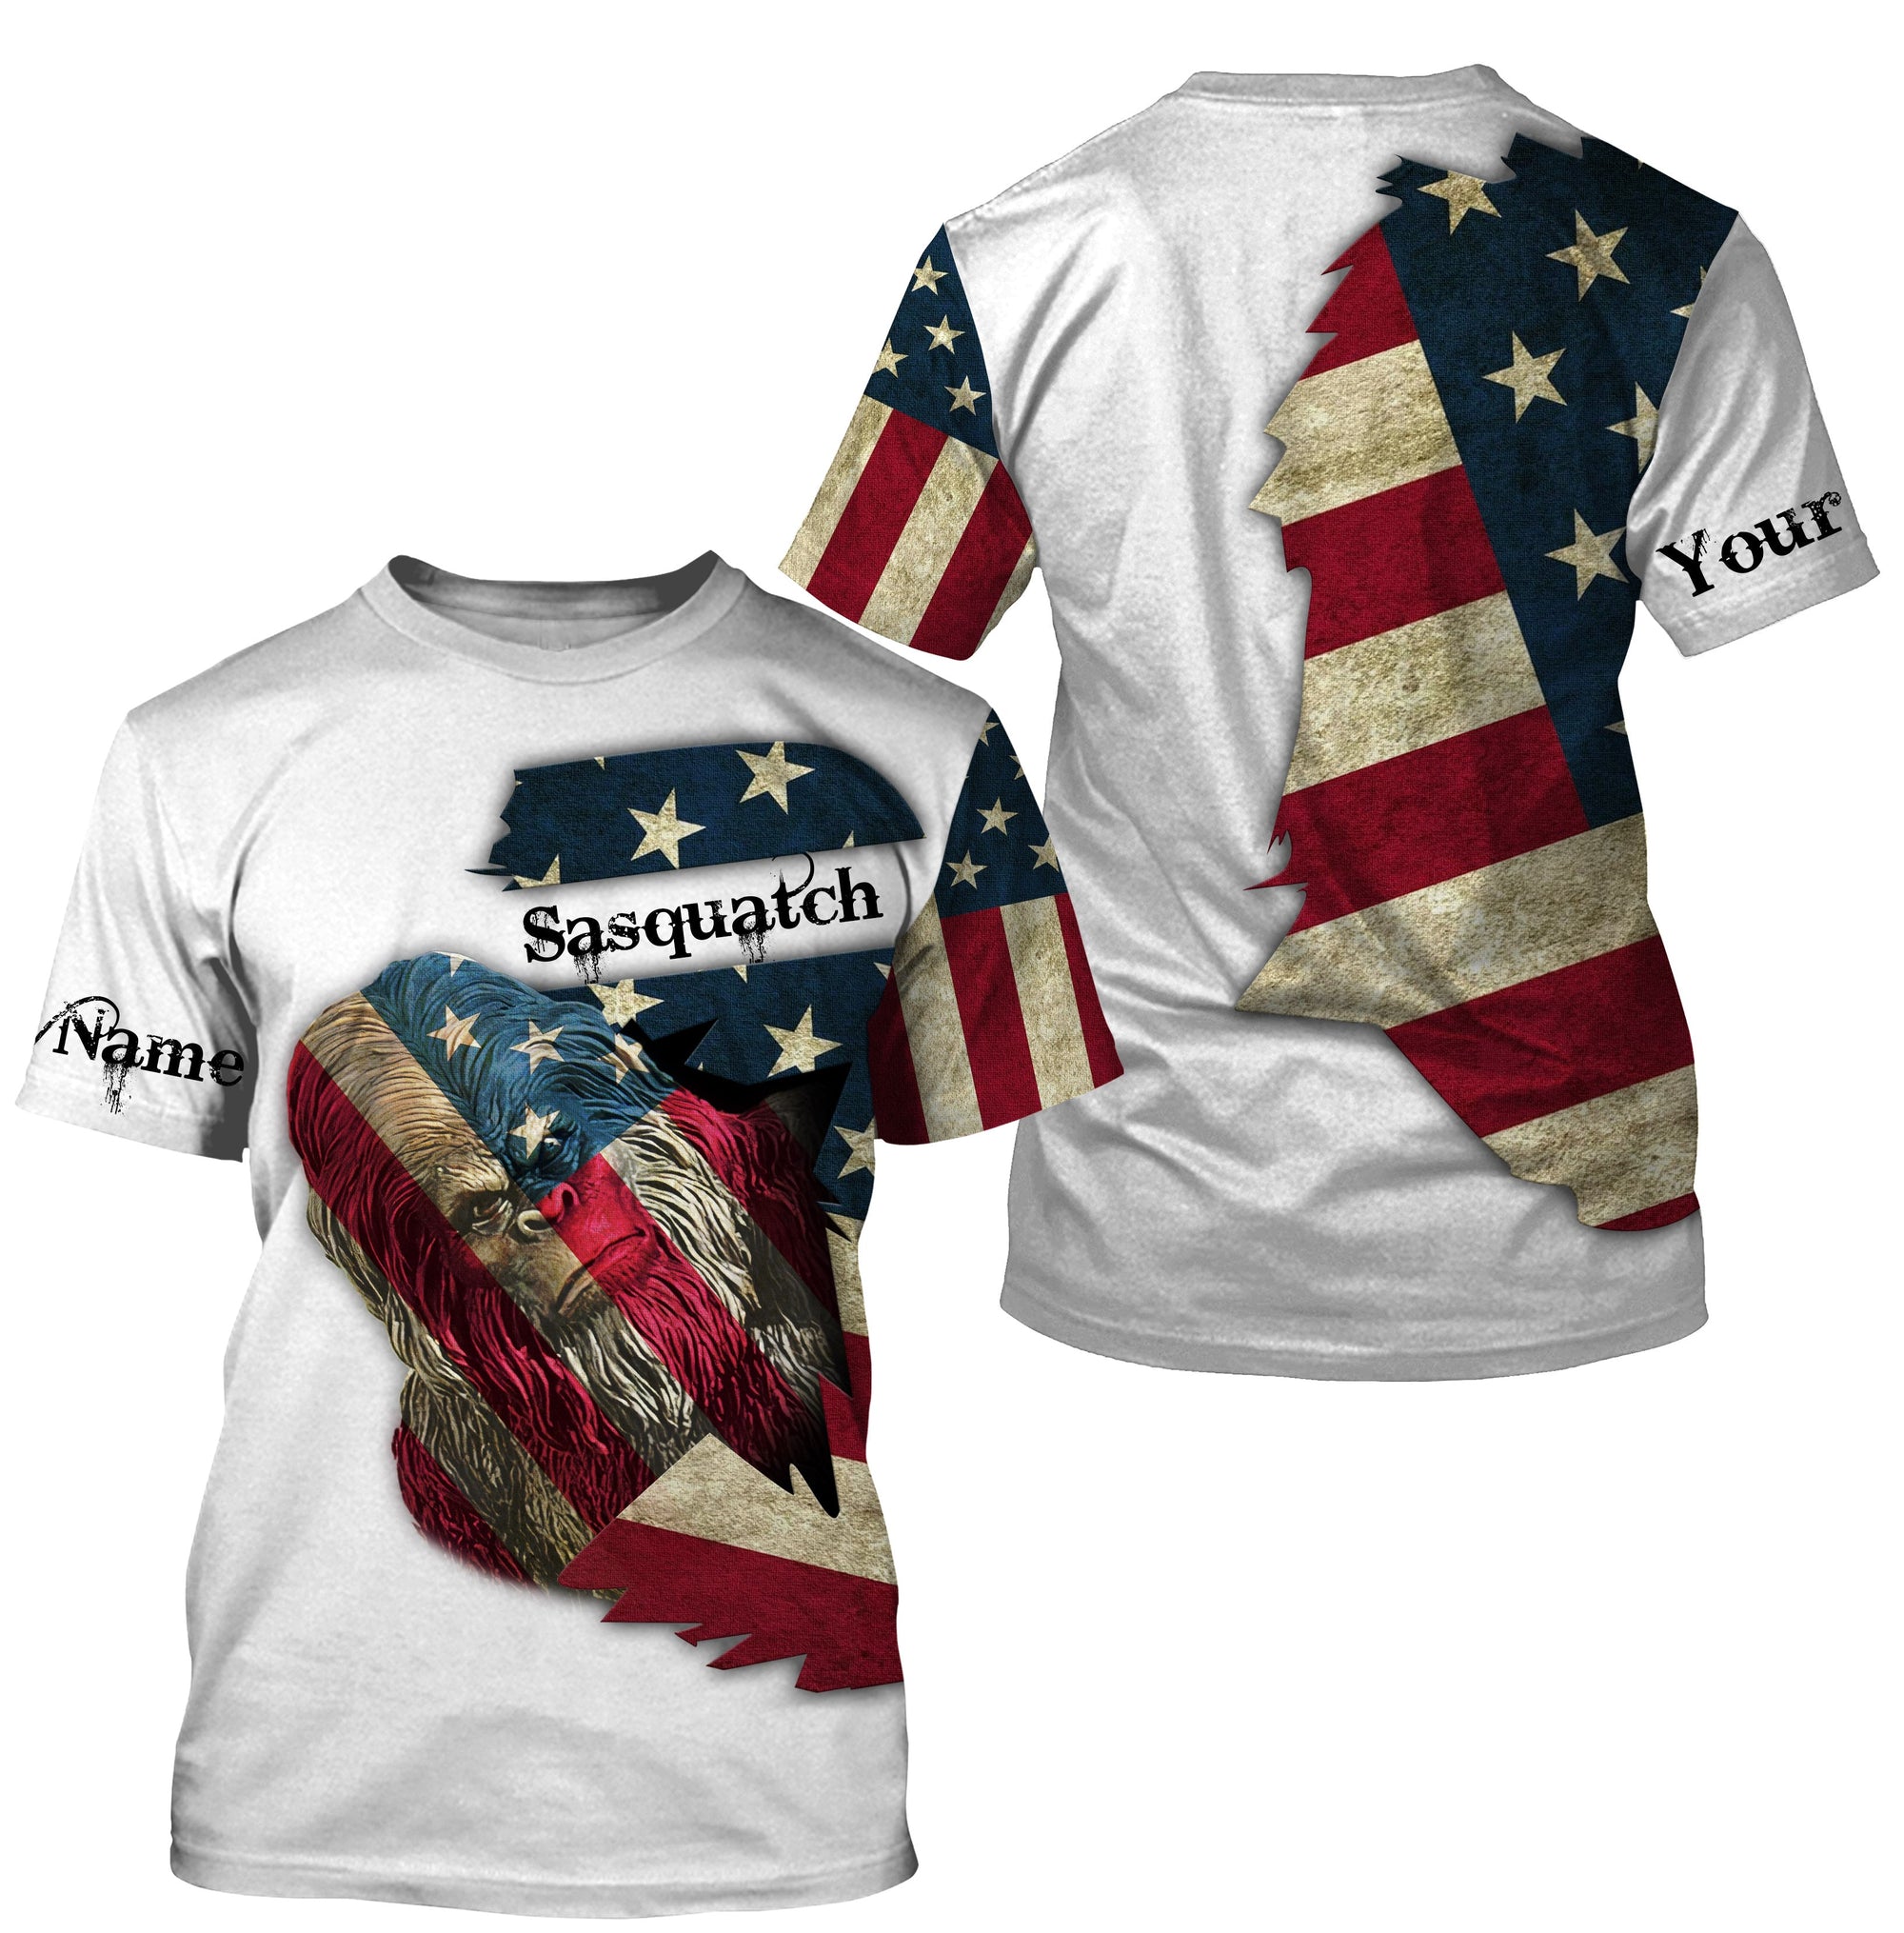 sasquatch-vintage-american-flag-patriotic-personalized-camping-shirt-bigfoot-3d-all-over-printed-shirts-fishing-t-shirt